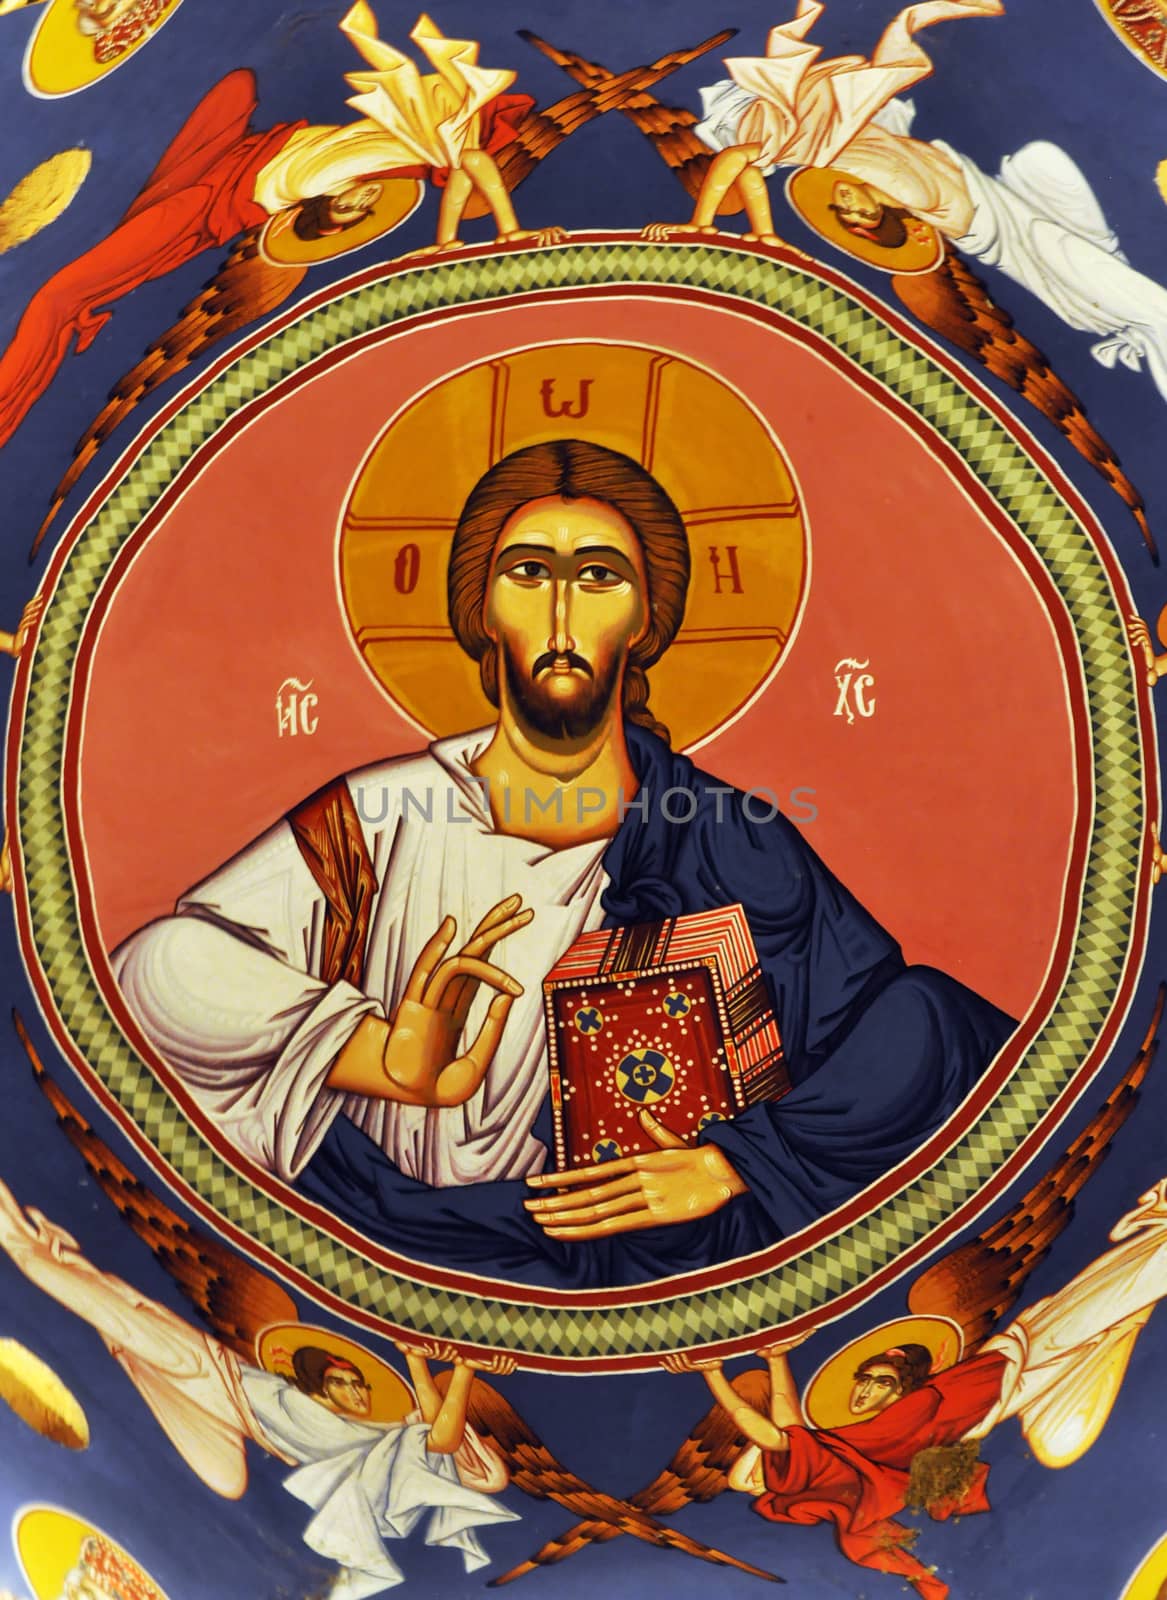 Fresco of Jesus Christ on the dome by Nikola30